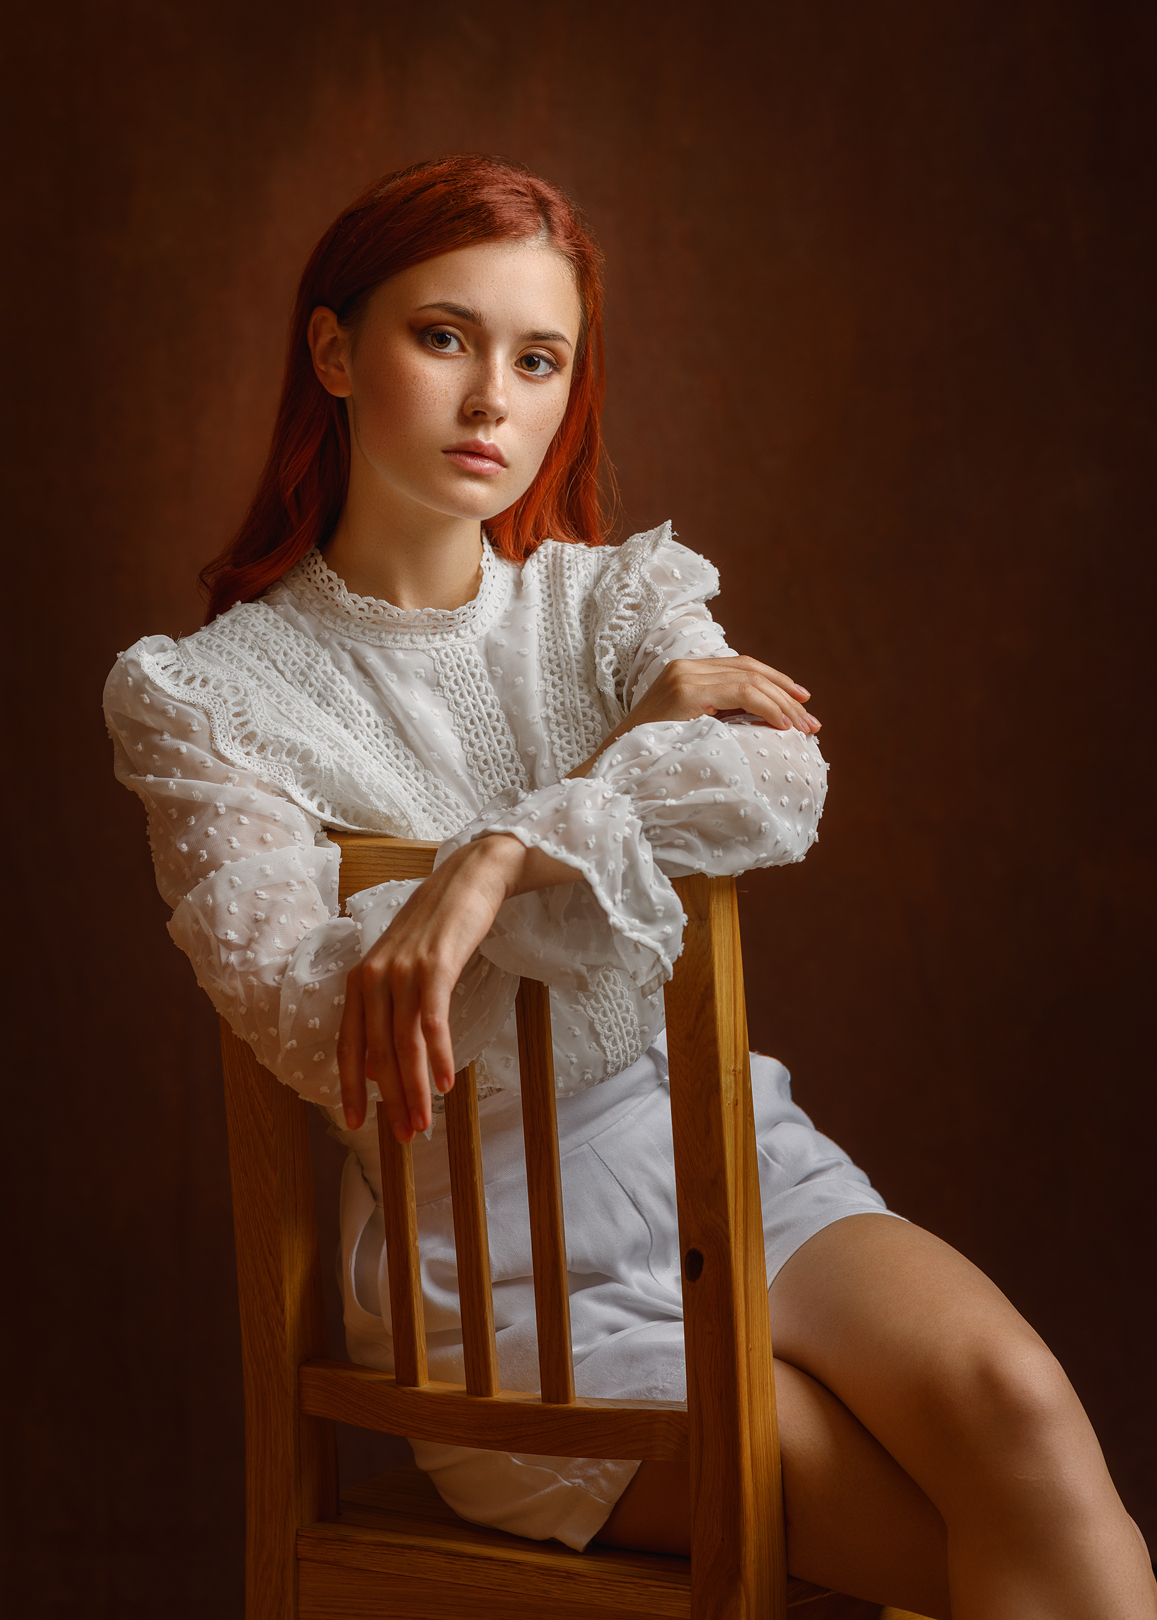 Sergey Sergeev Women Redhead Freckles White Clothing Chair 1157x1620